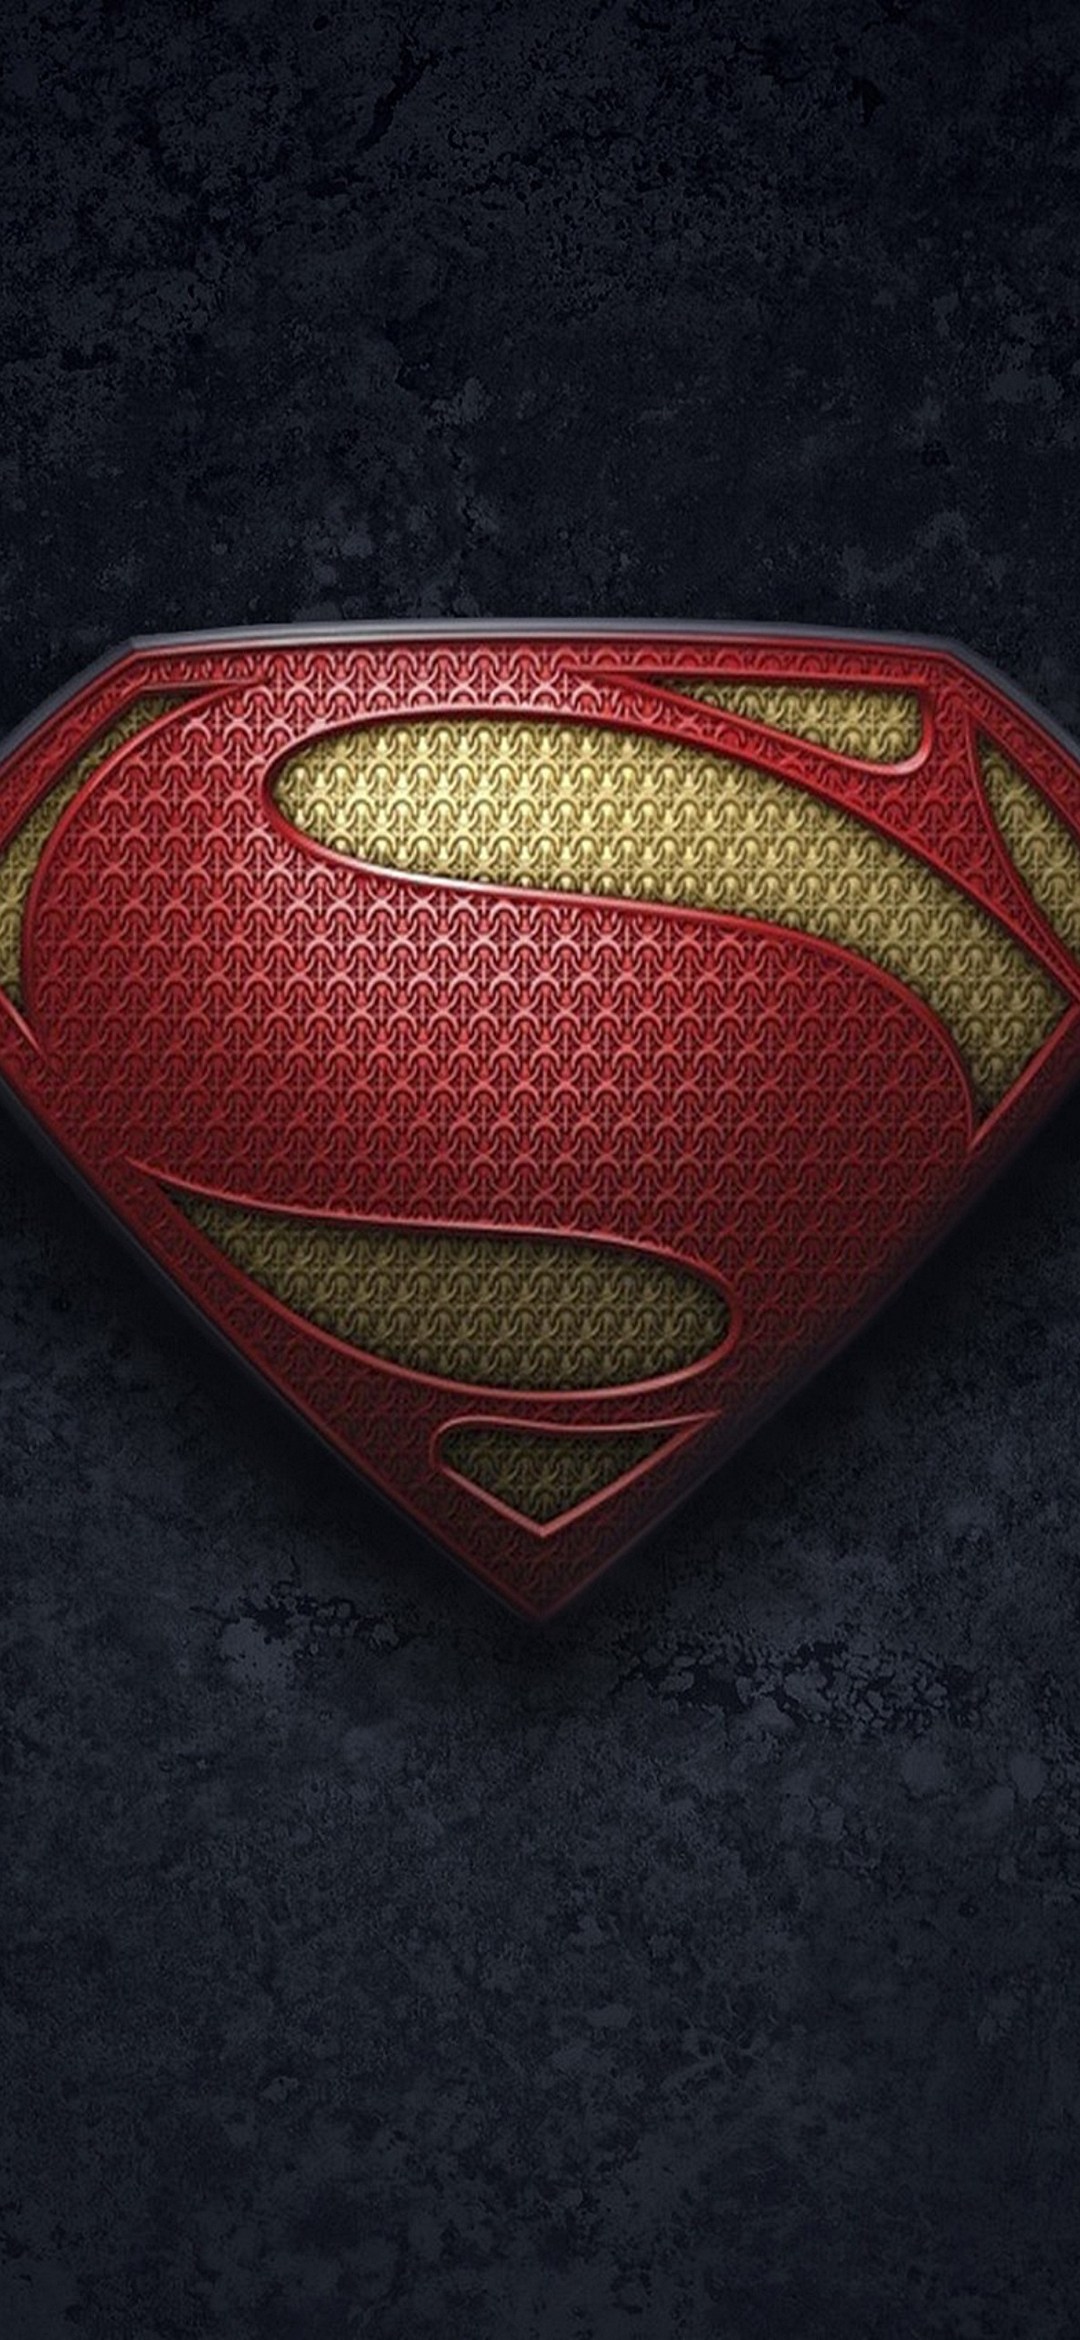 Profound Superman Emblem Redmagic 5 Android 壁紙 待ち受け Sumaran